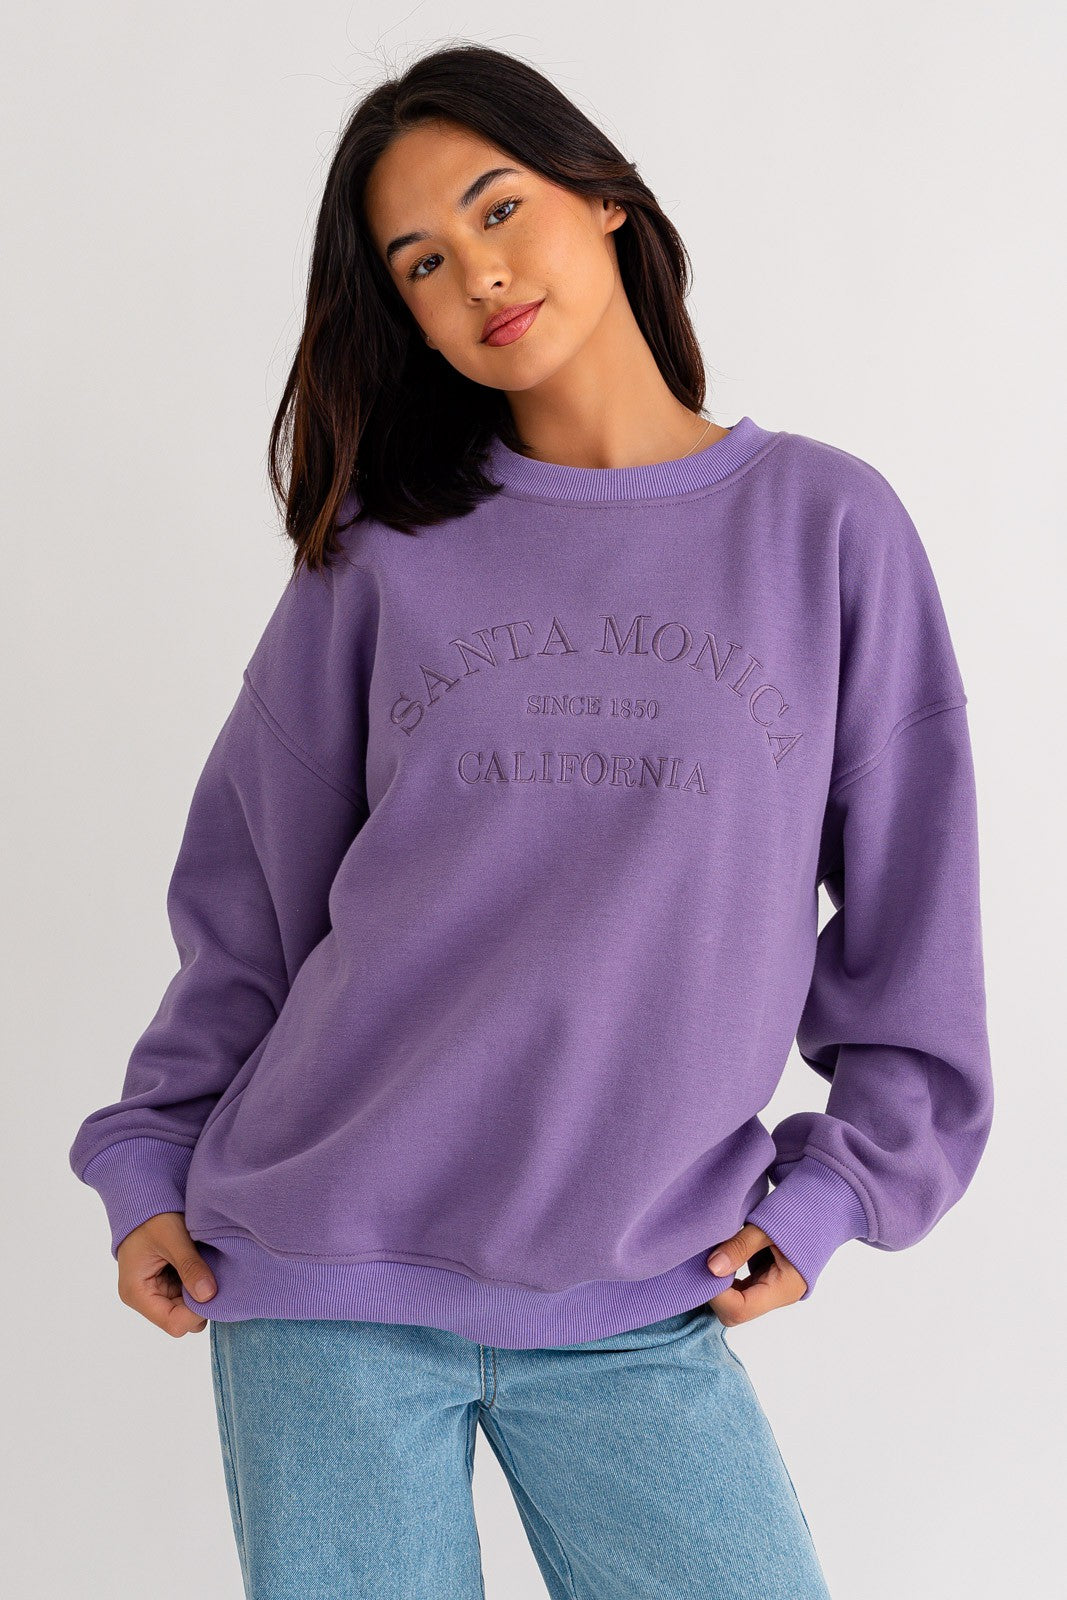 Santa Monica CA Embroidery Sweatshirt